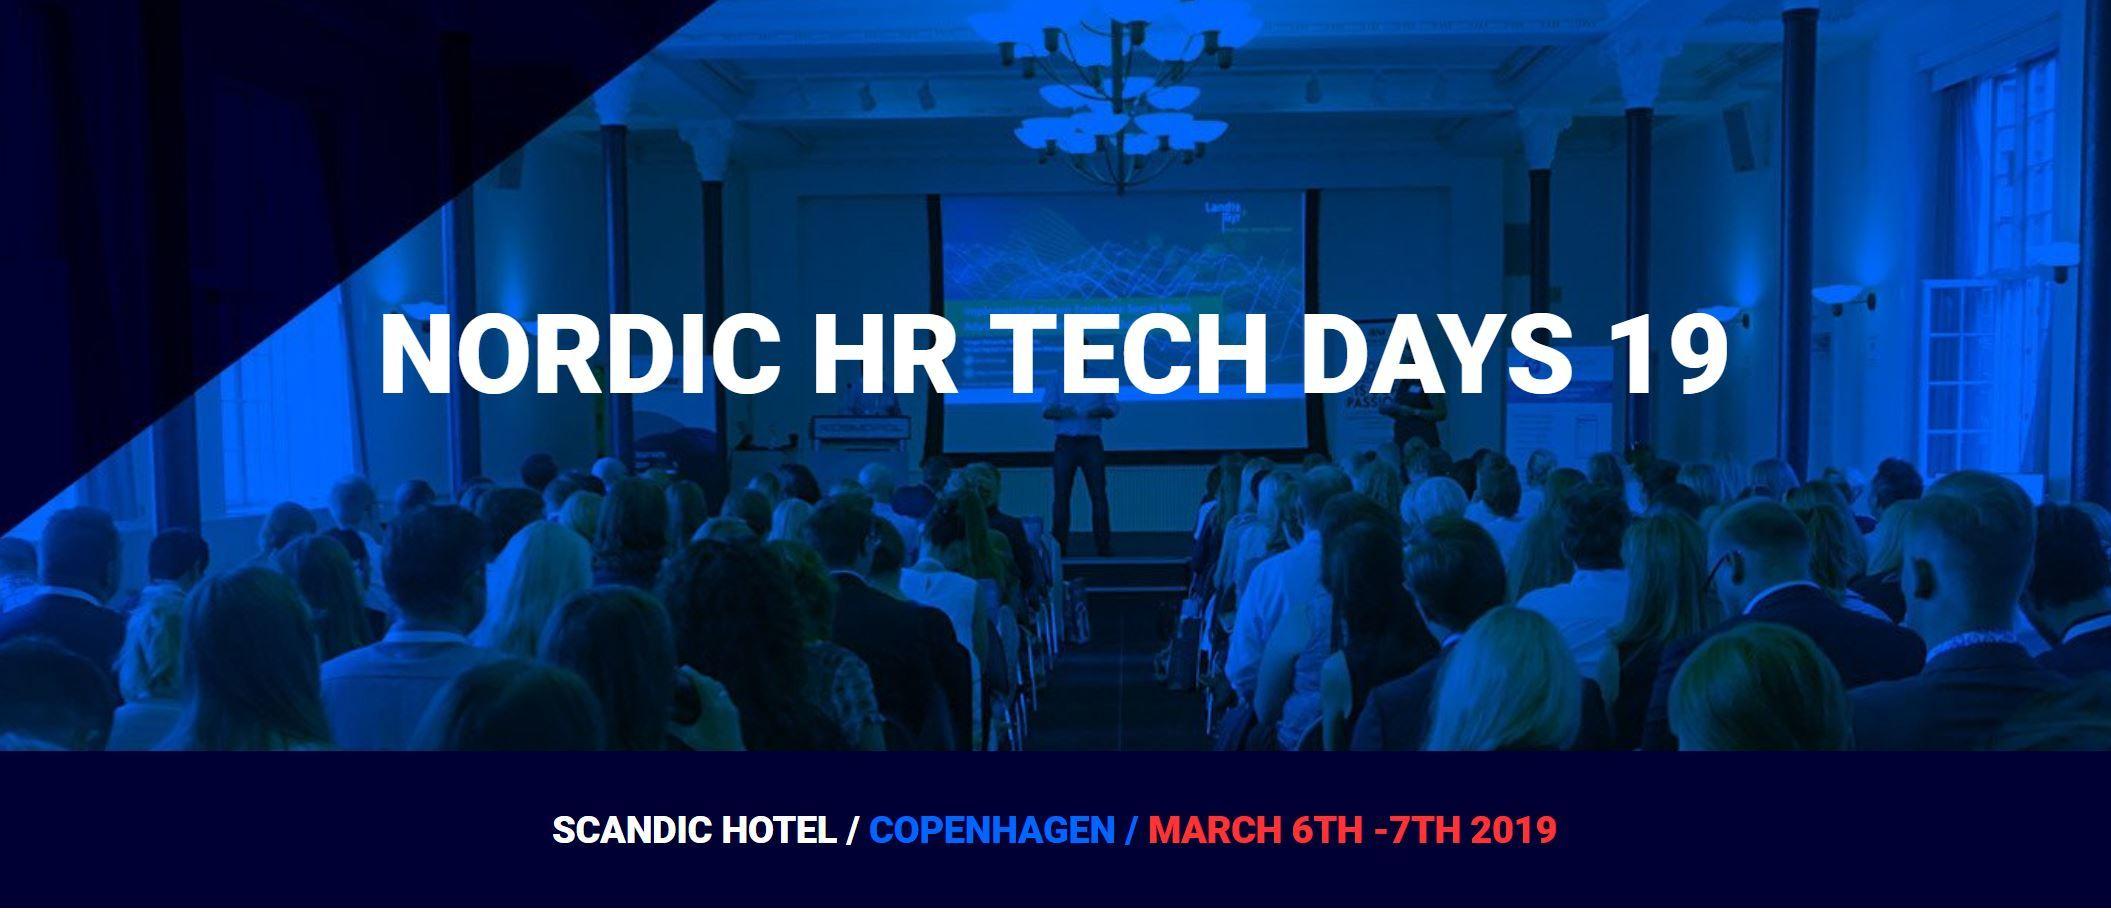 The magic happens @Nordic HR Tech days Copenhagen